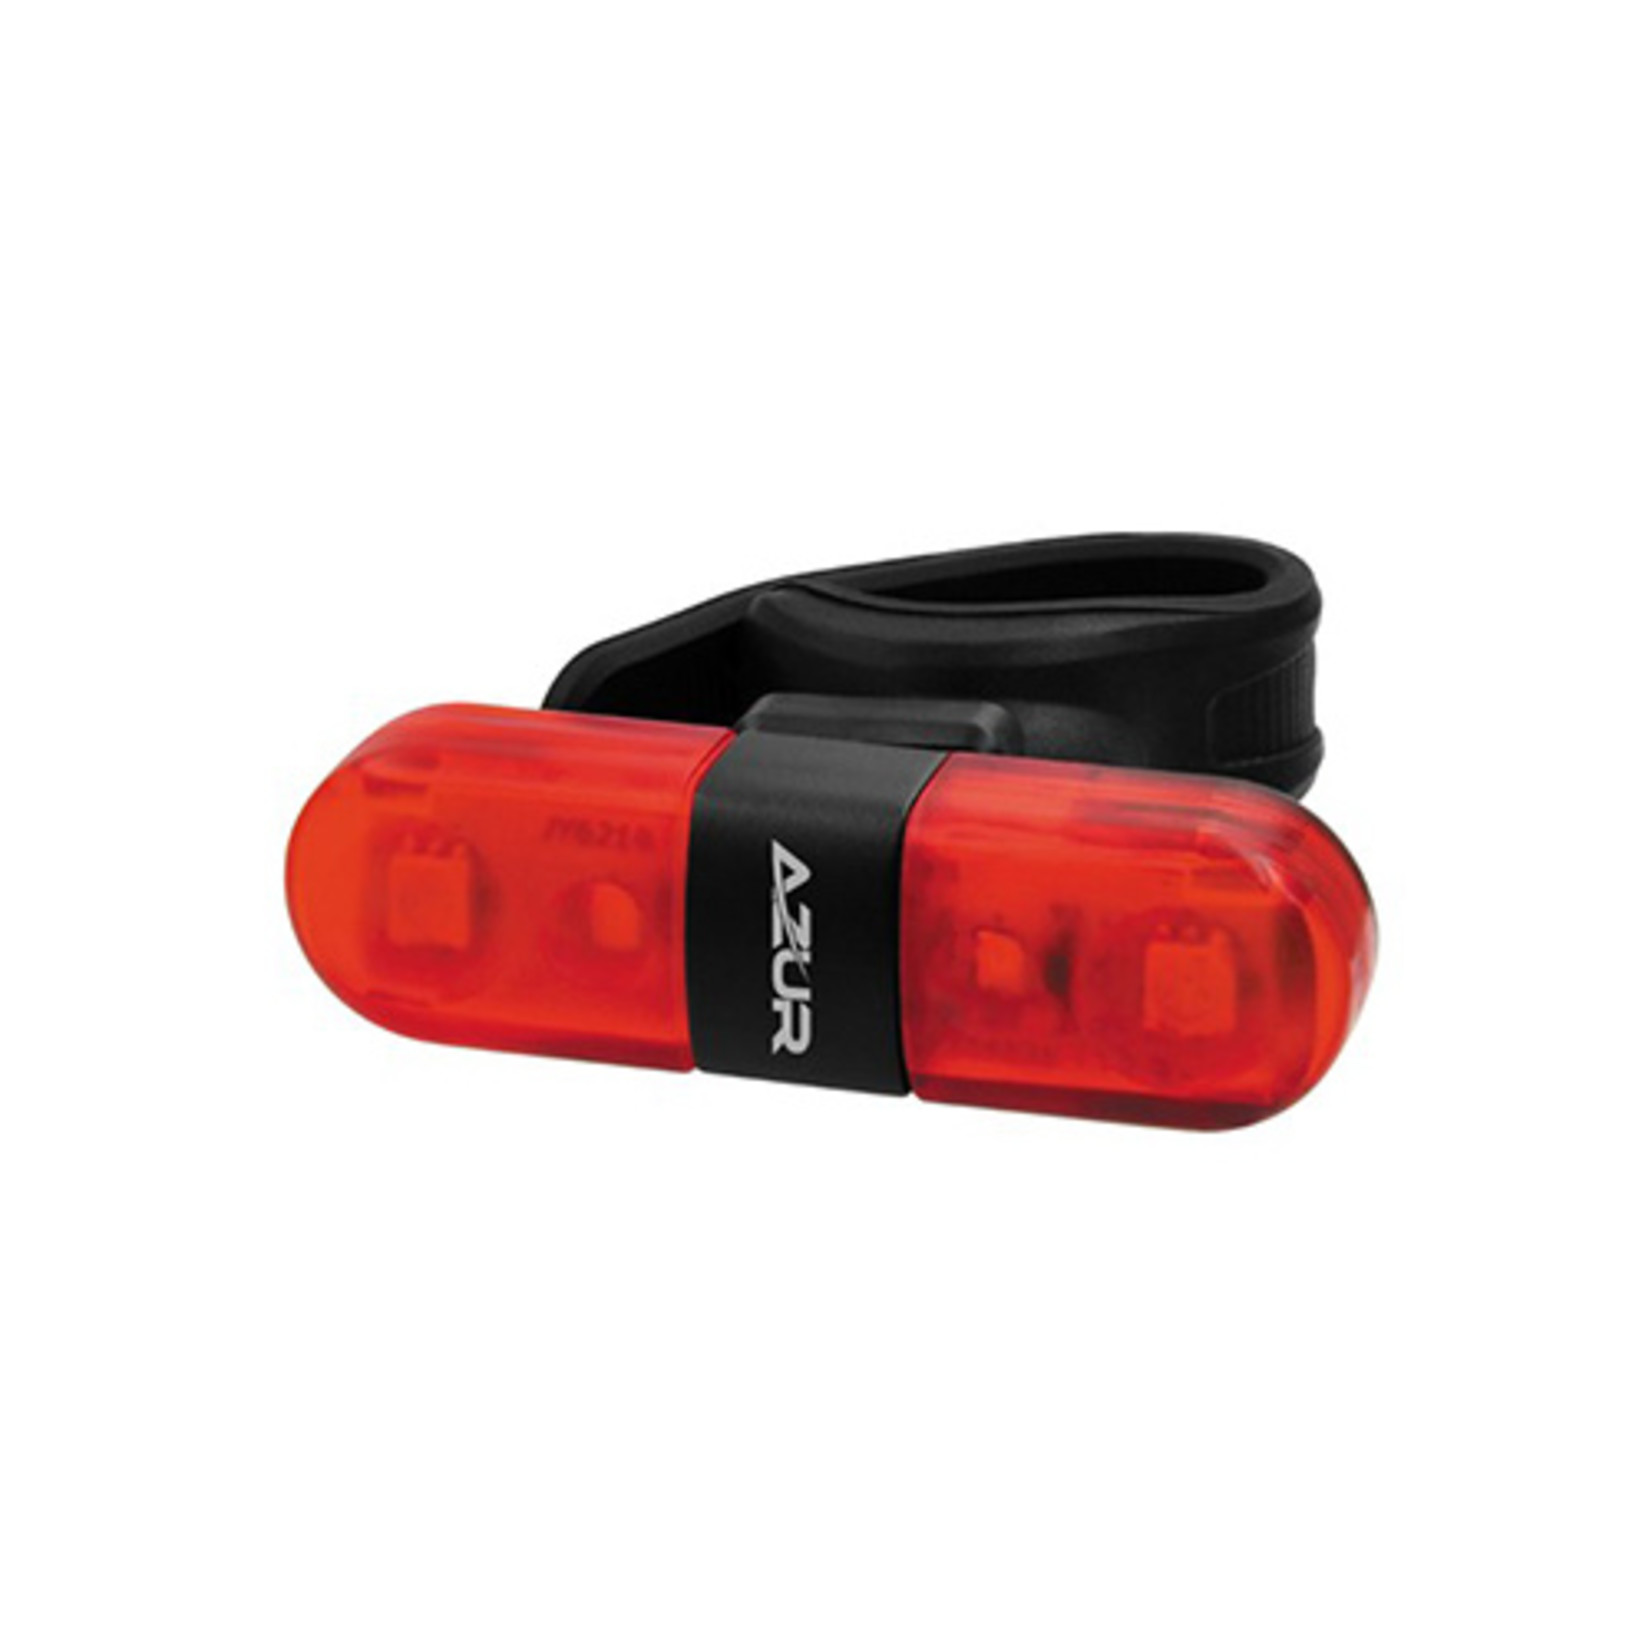 Azur Azur Bike/Cycling Tail Light - USB Nano 30 Lumens Rear Light